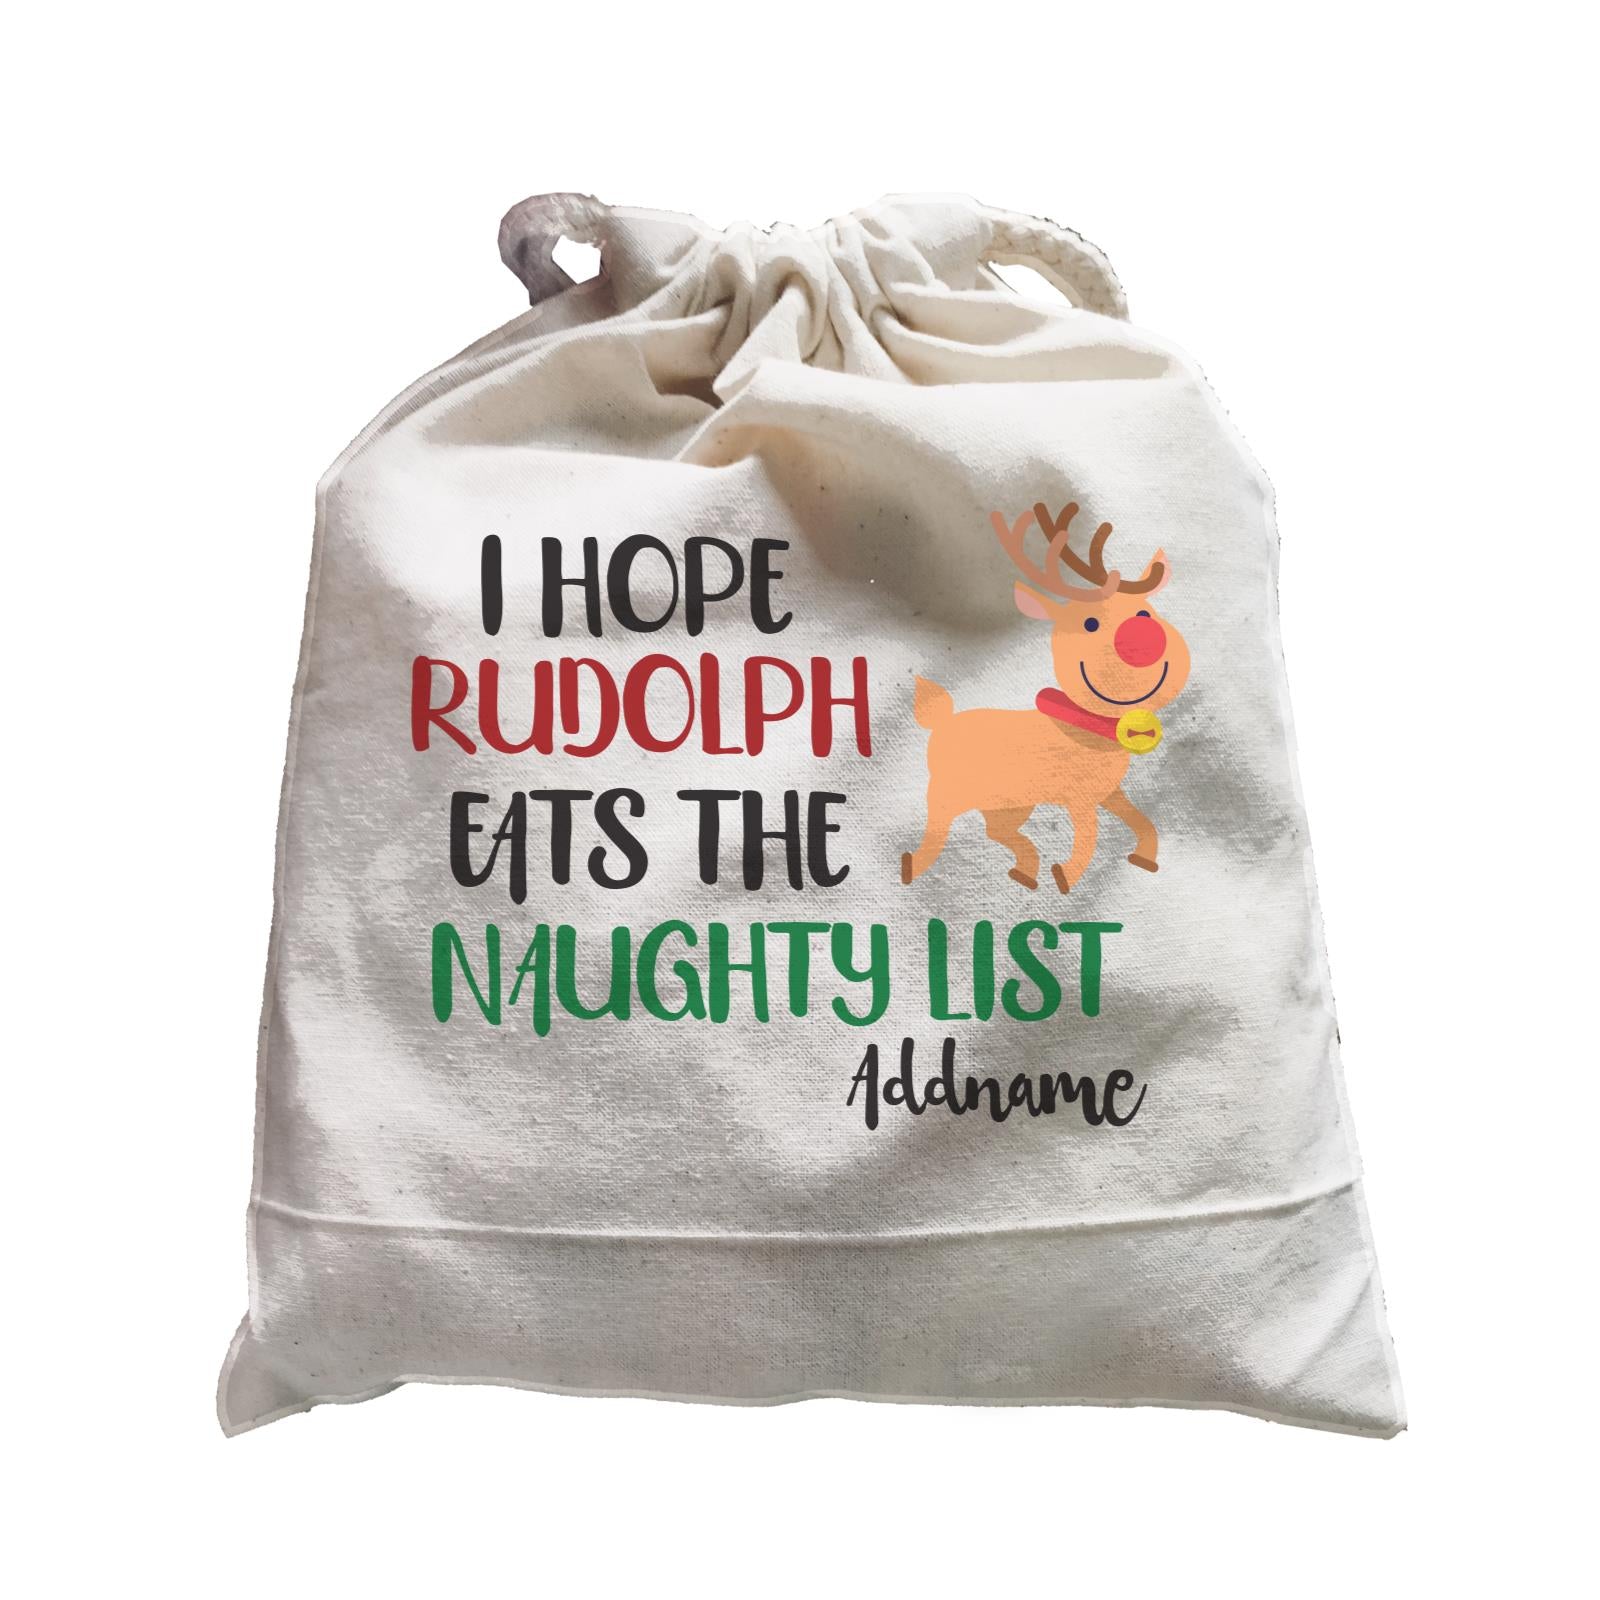 Xmas I Hope Rudolf Eats the Naughty List Satchel